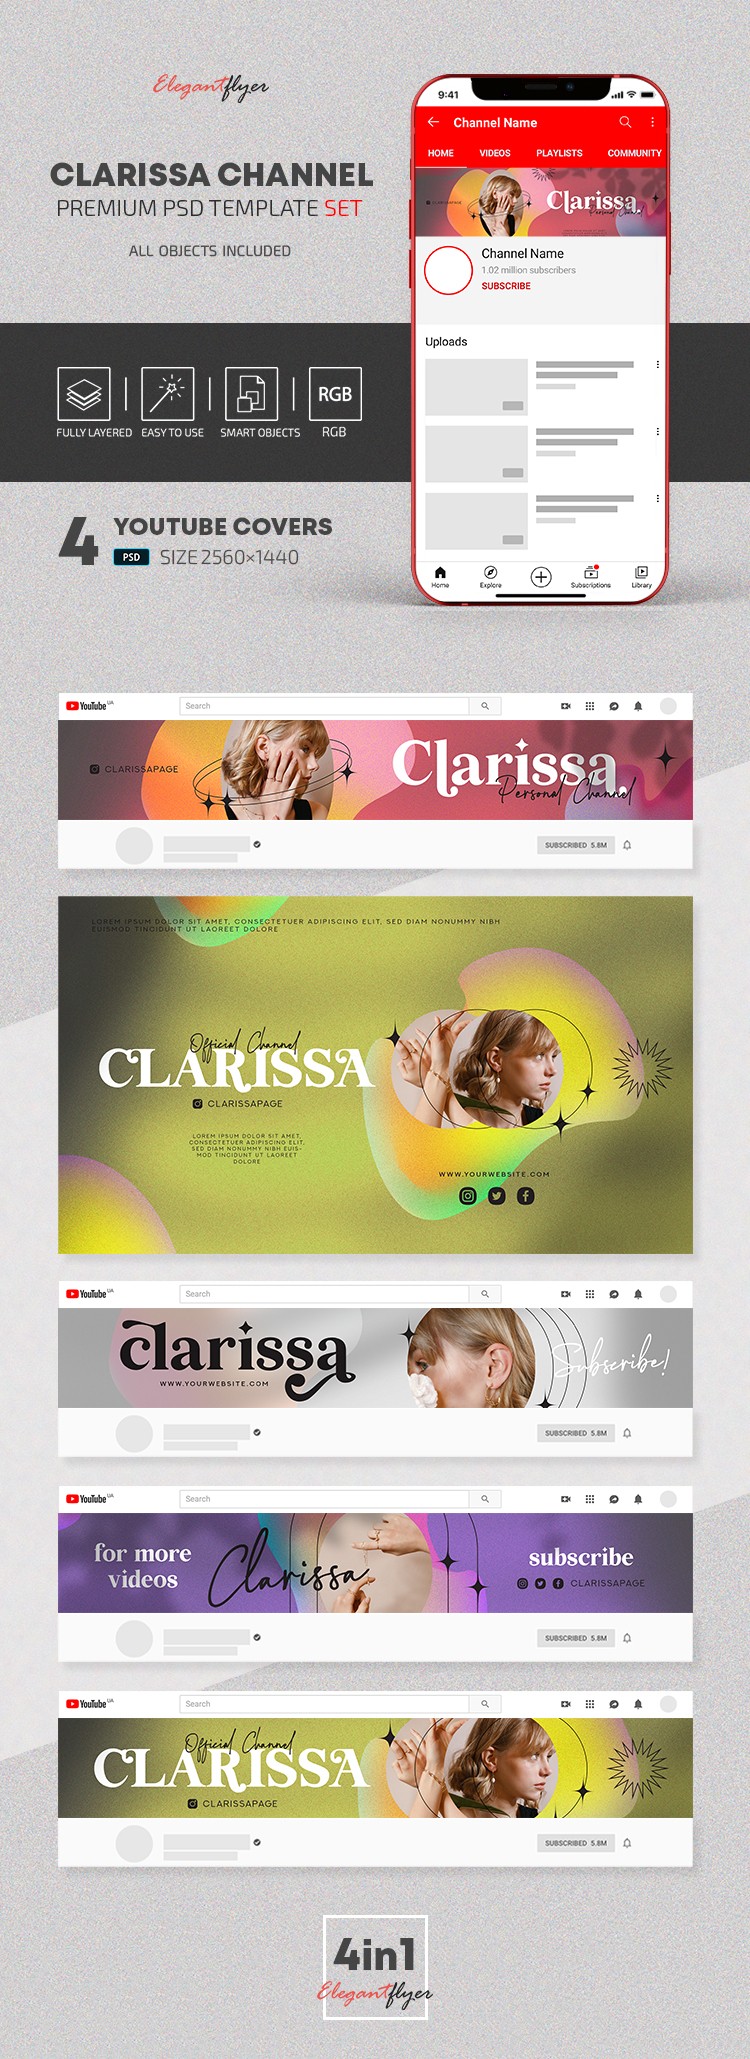 Canal Clarissa no Youtube by ElegantFlyer